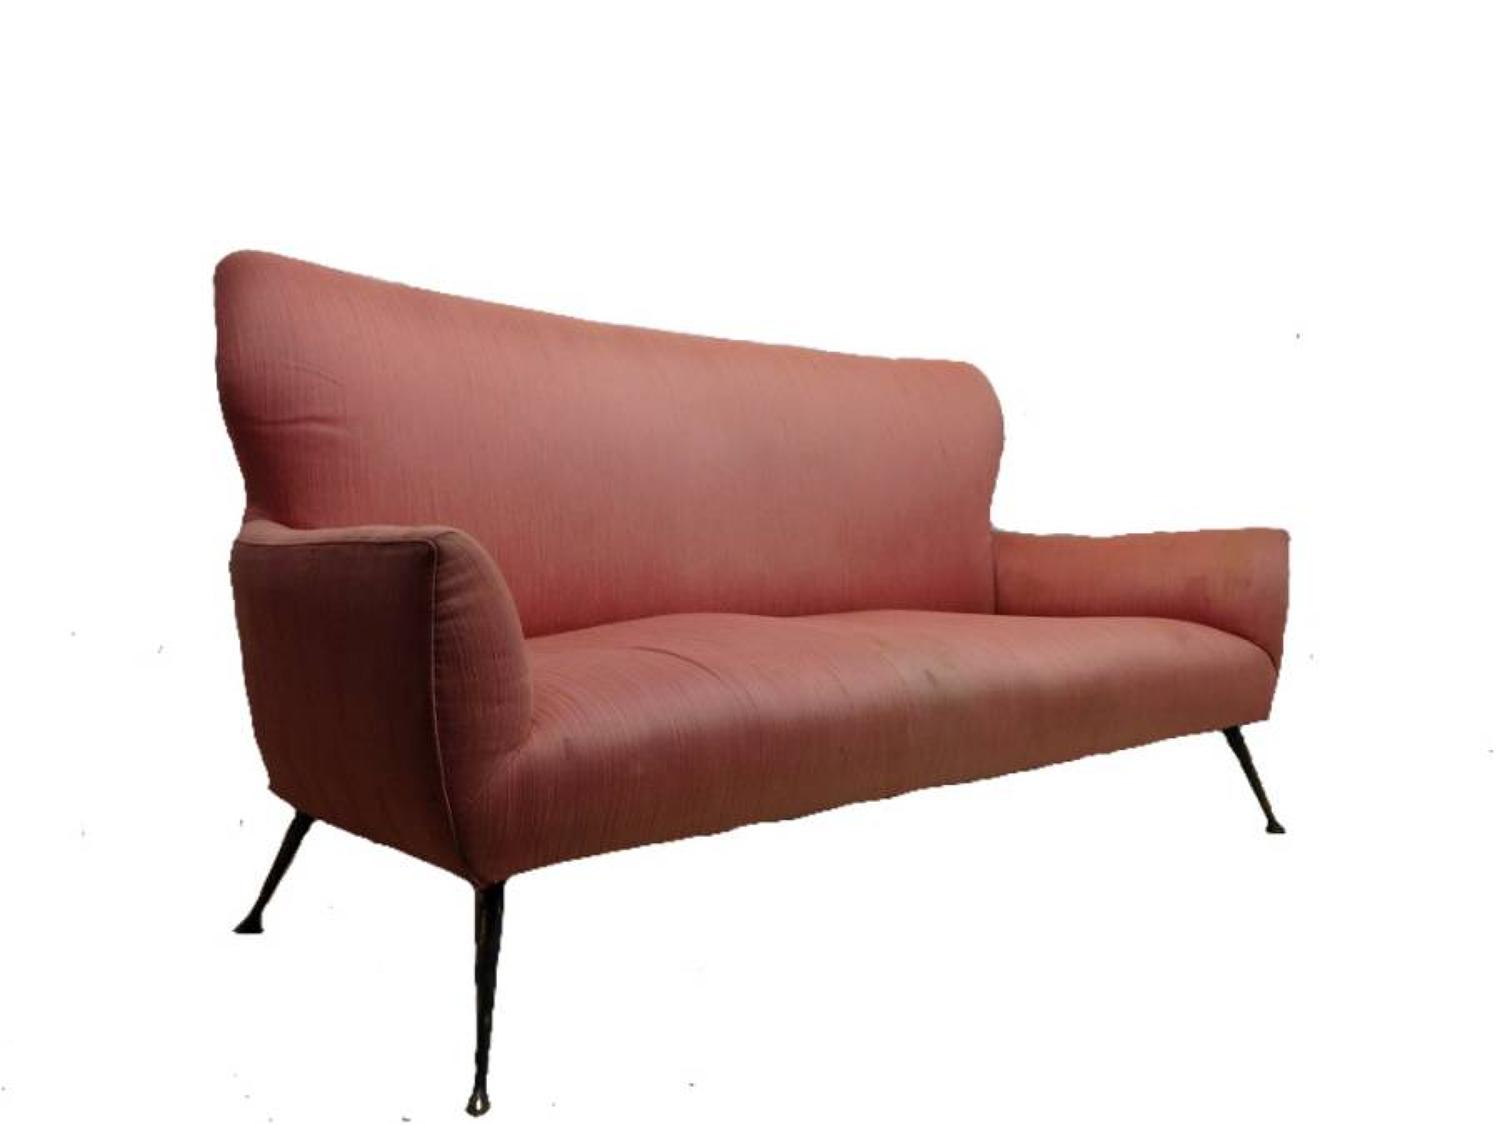 1950s Italian sofa with brass legs